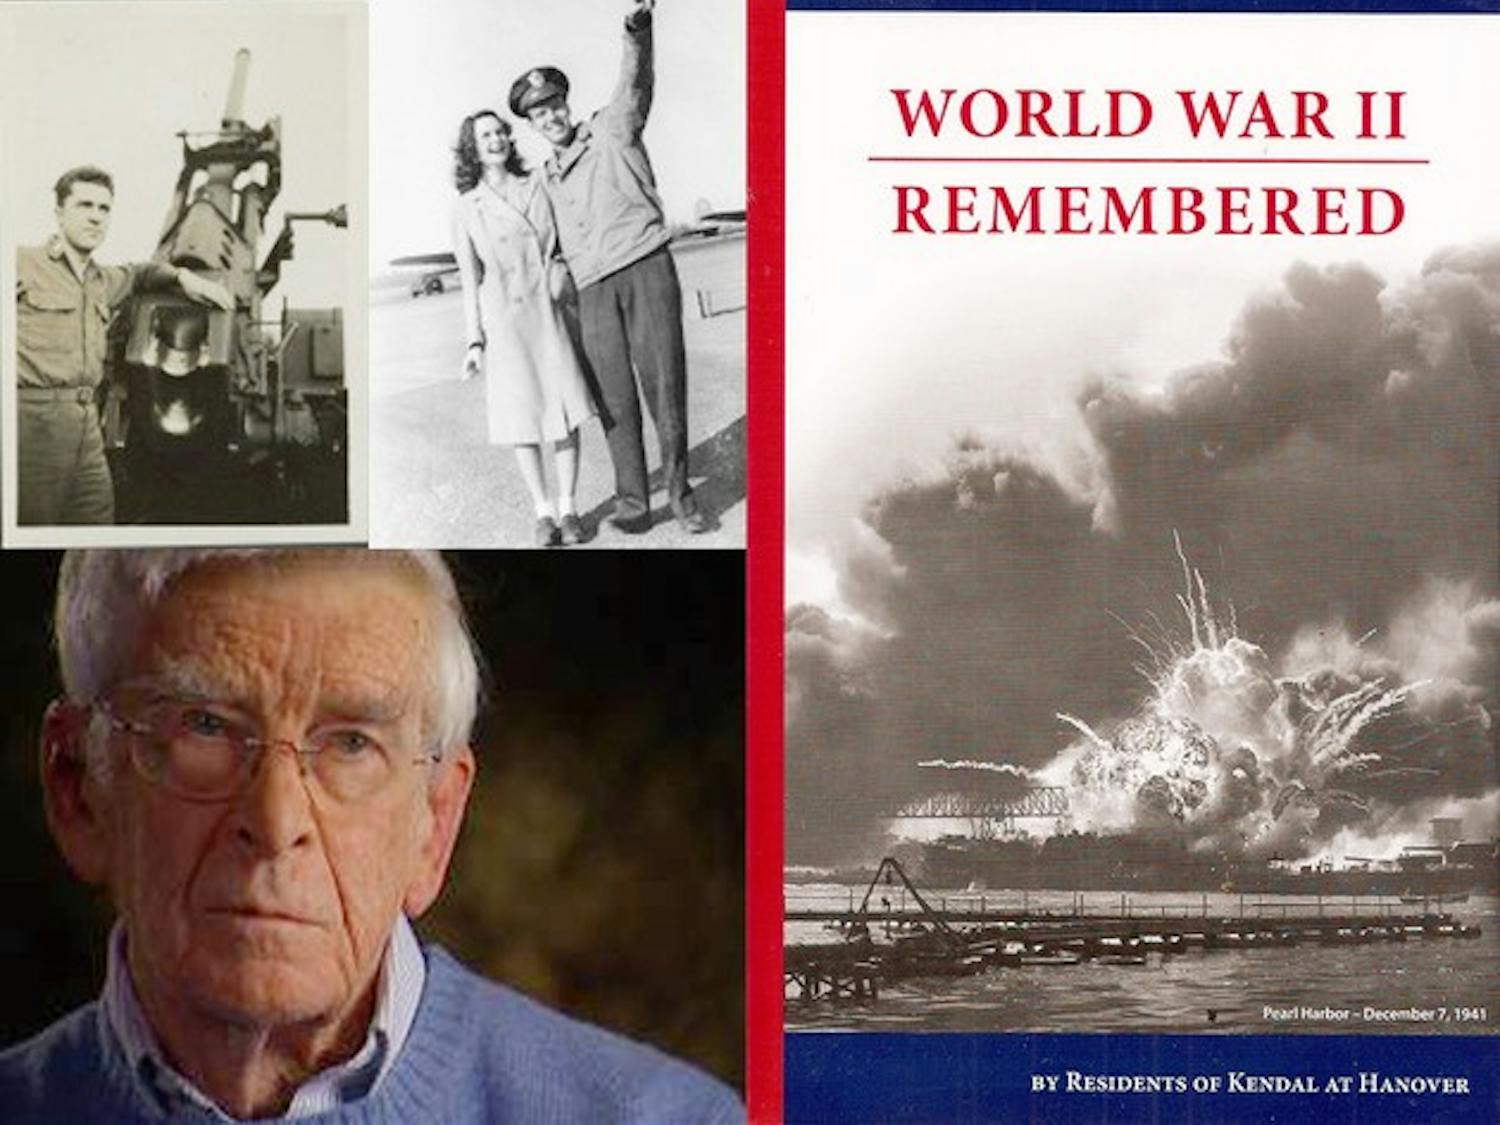 World War II survivors and contributors to 